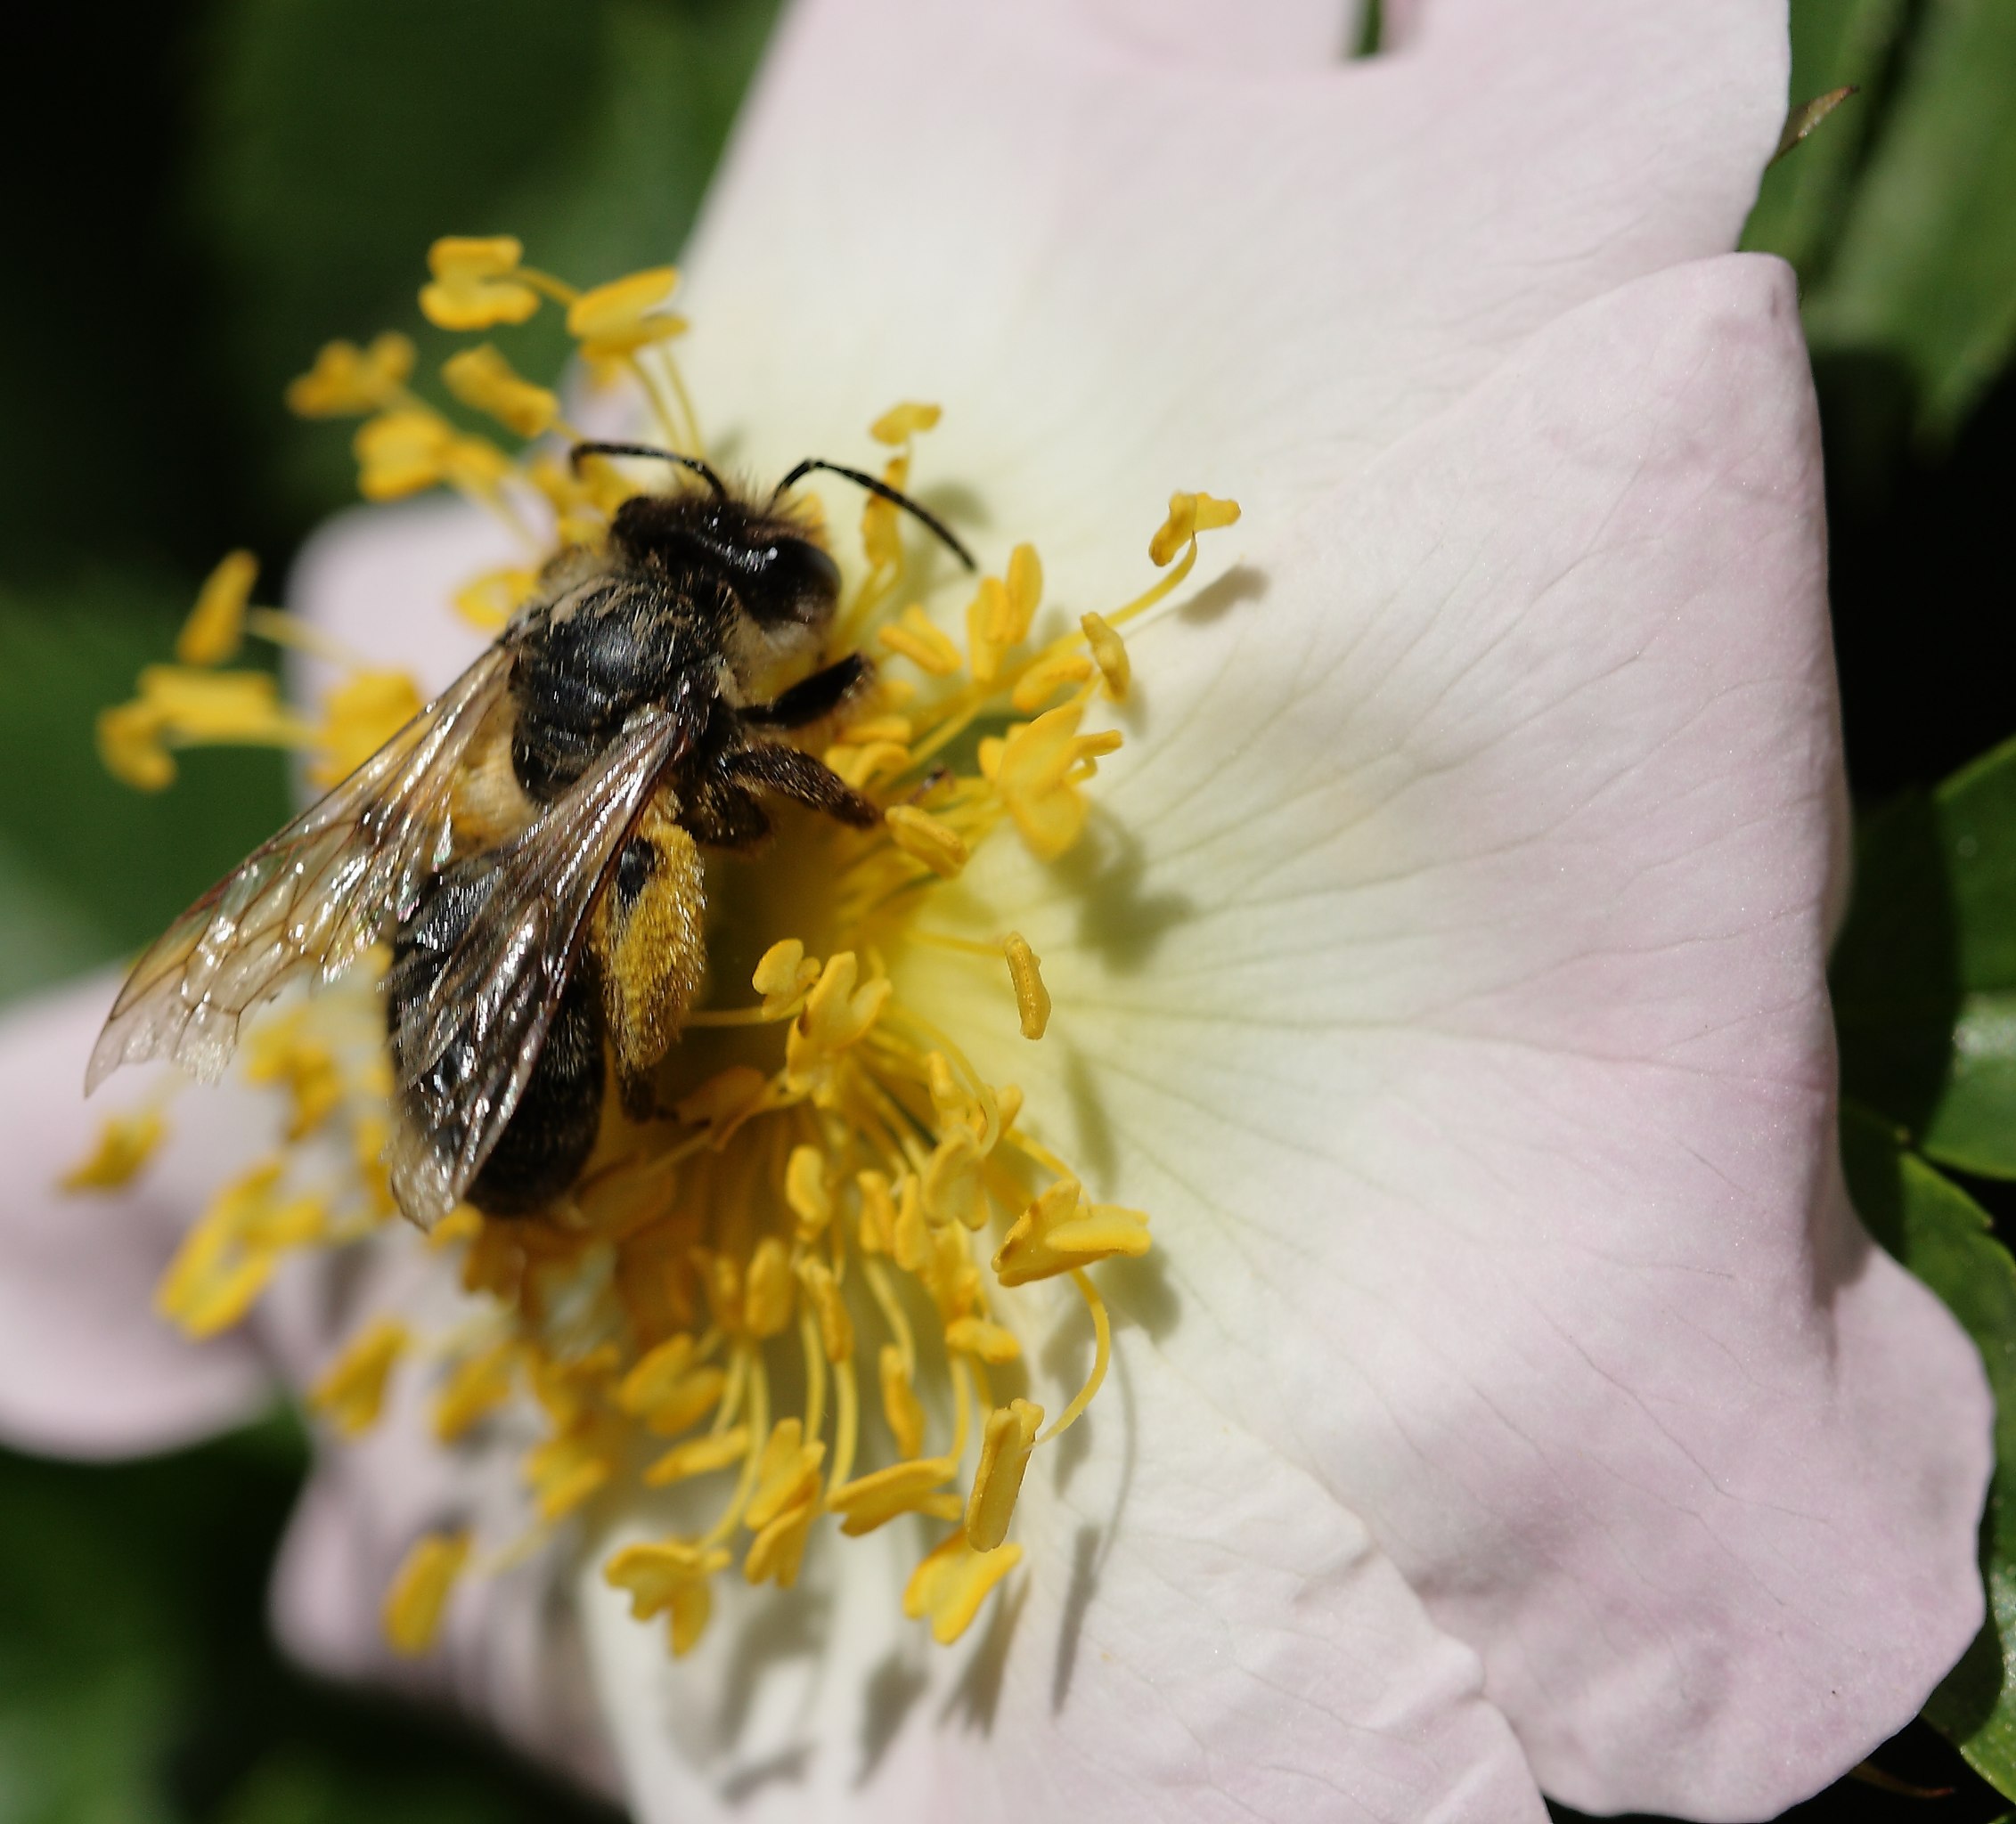 hul neutral fe File:Insekt auf einer Blüte der Hunds-Rose 7923.JPG - Wikimedia Commons